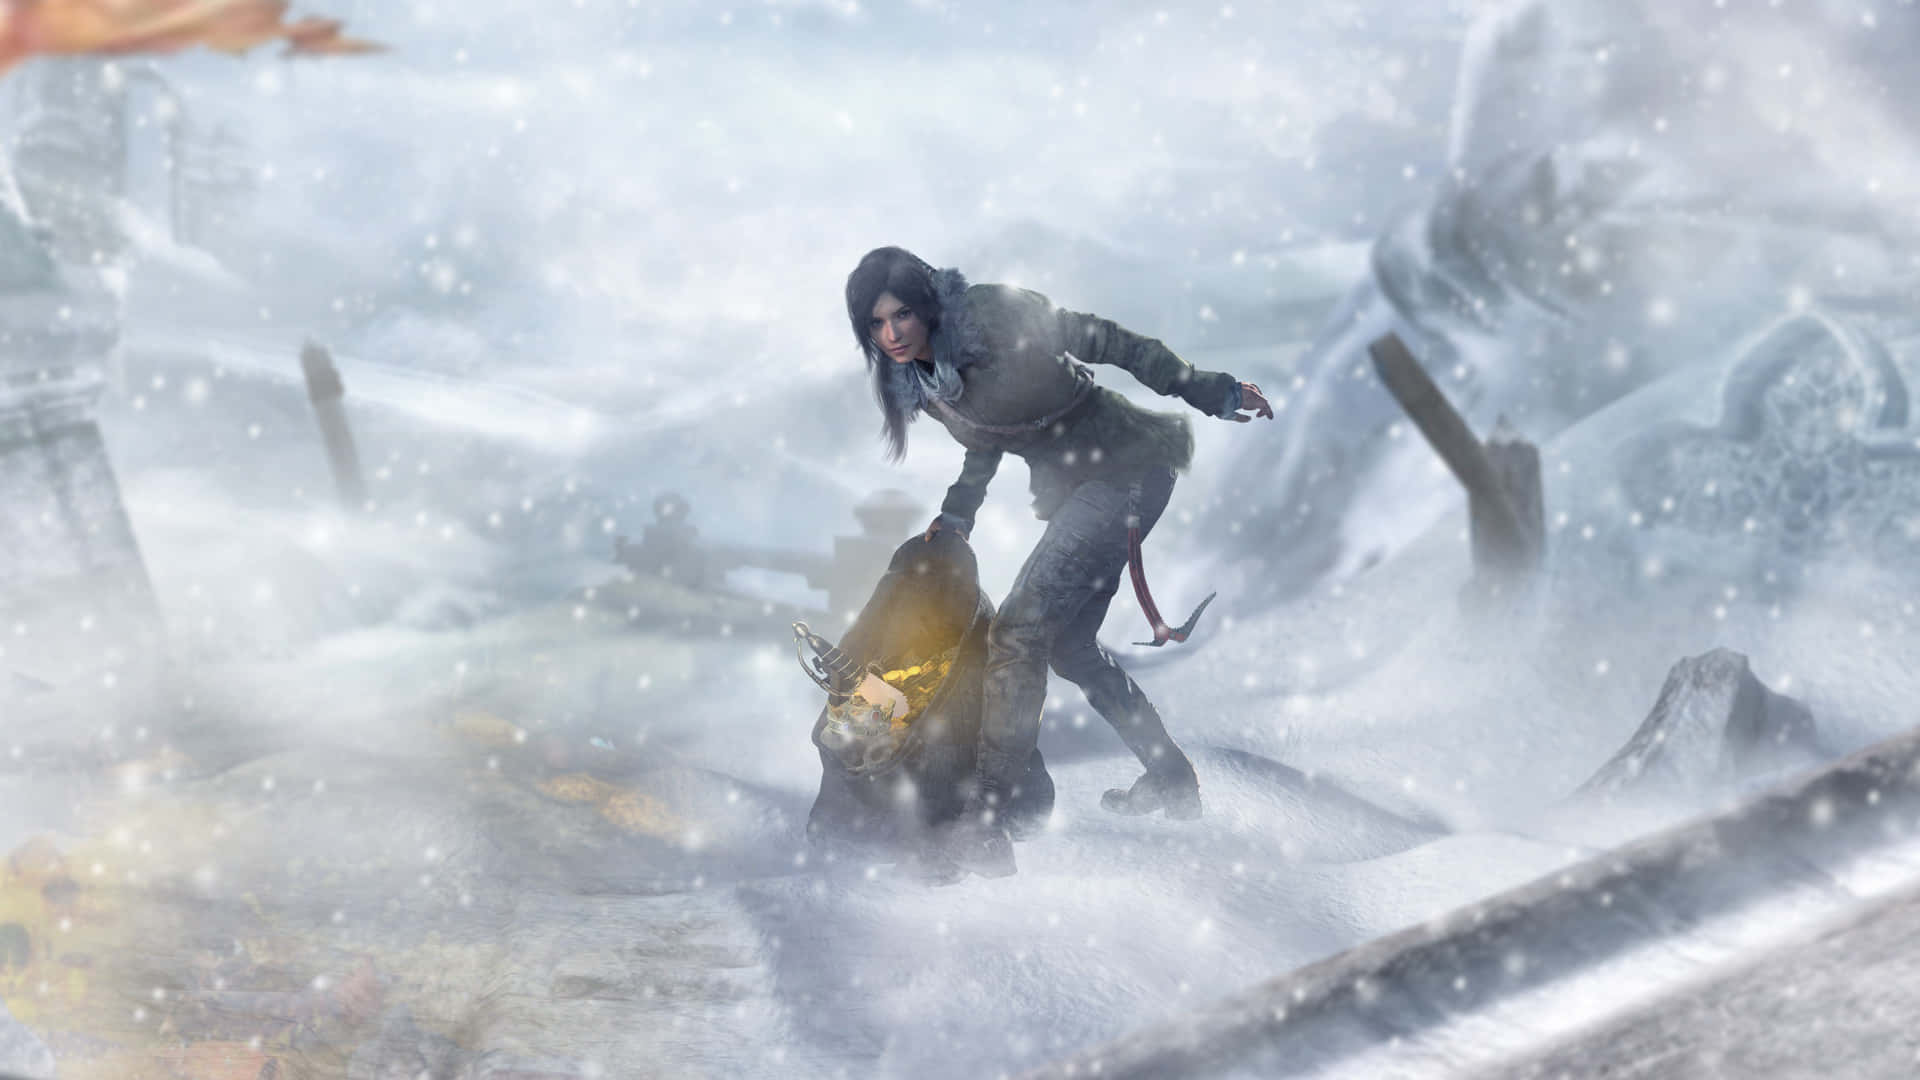 Lara Croft embarks on a new, thrilling adventure.